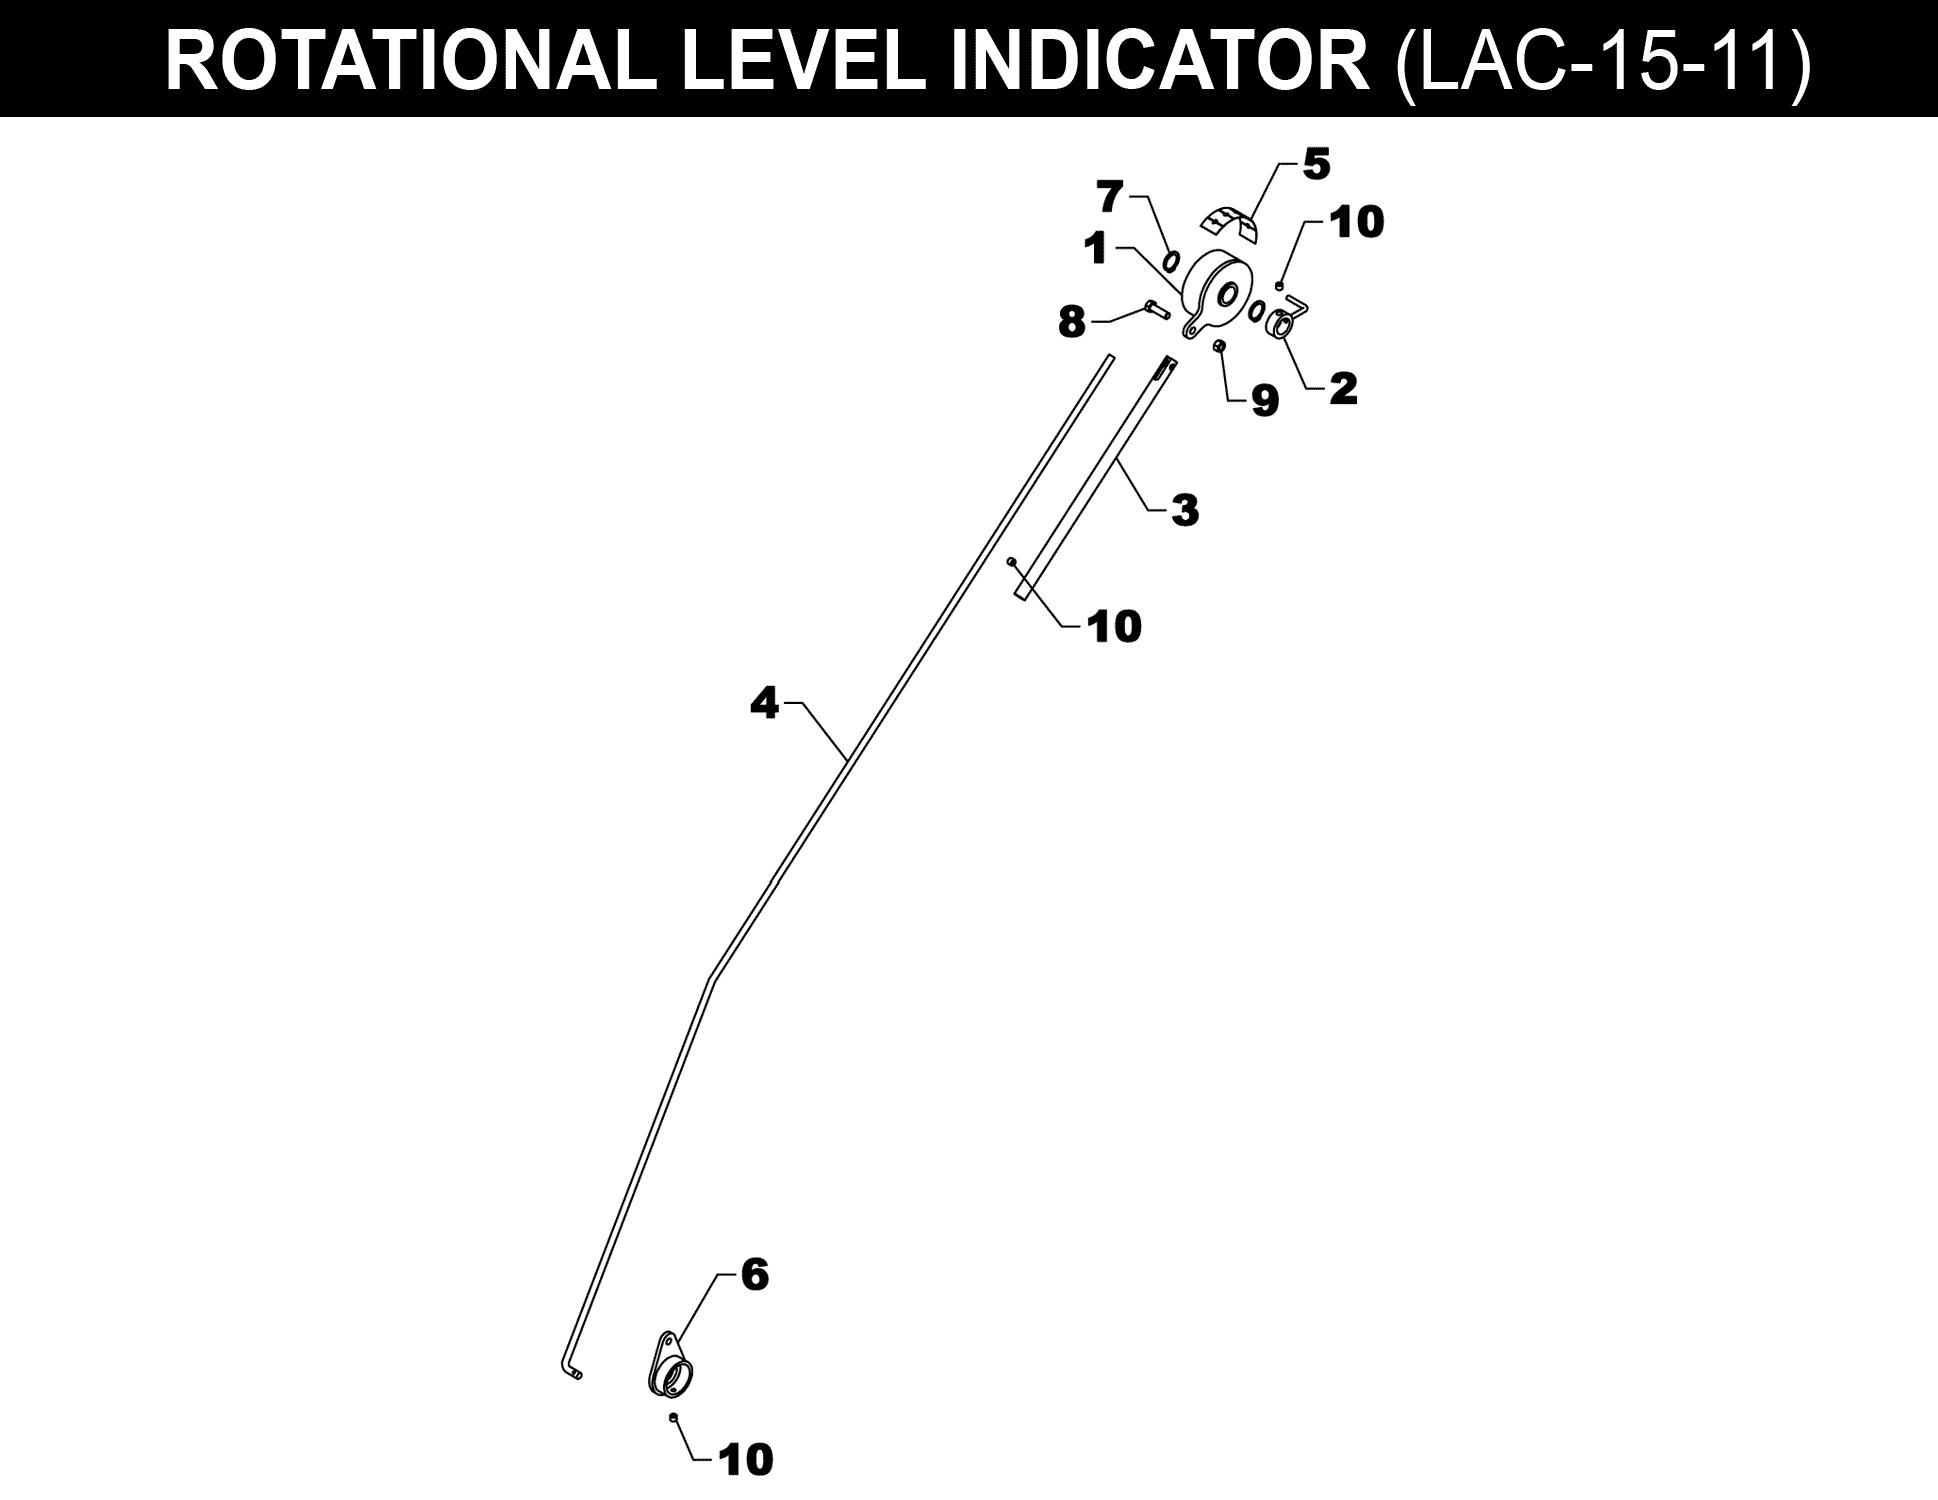 Bucket Indicator - LAC-15-11